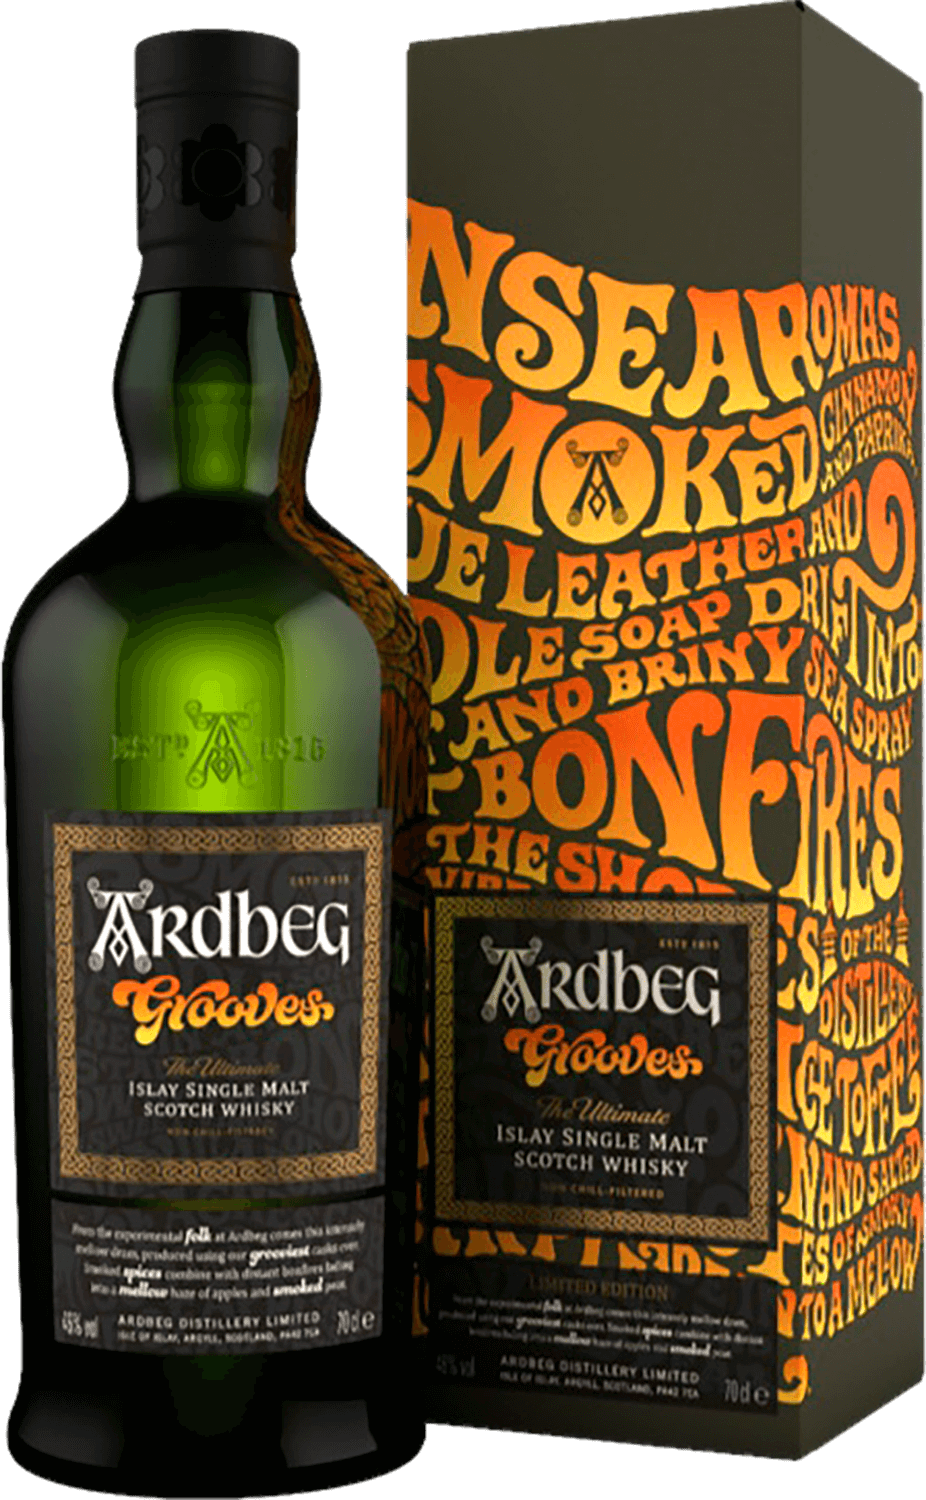 Ardbeg Grooves Islay Single Malt Scotch Whisky (gift box)